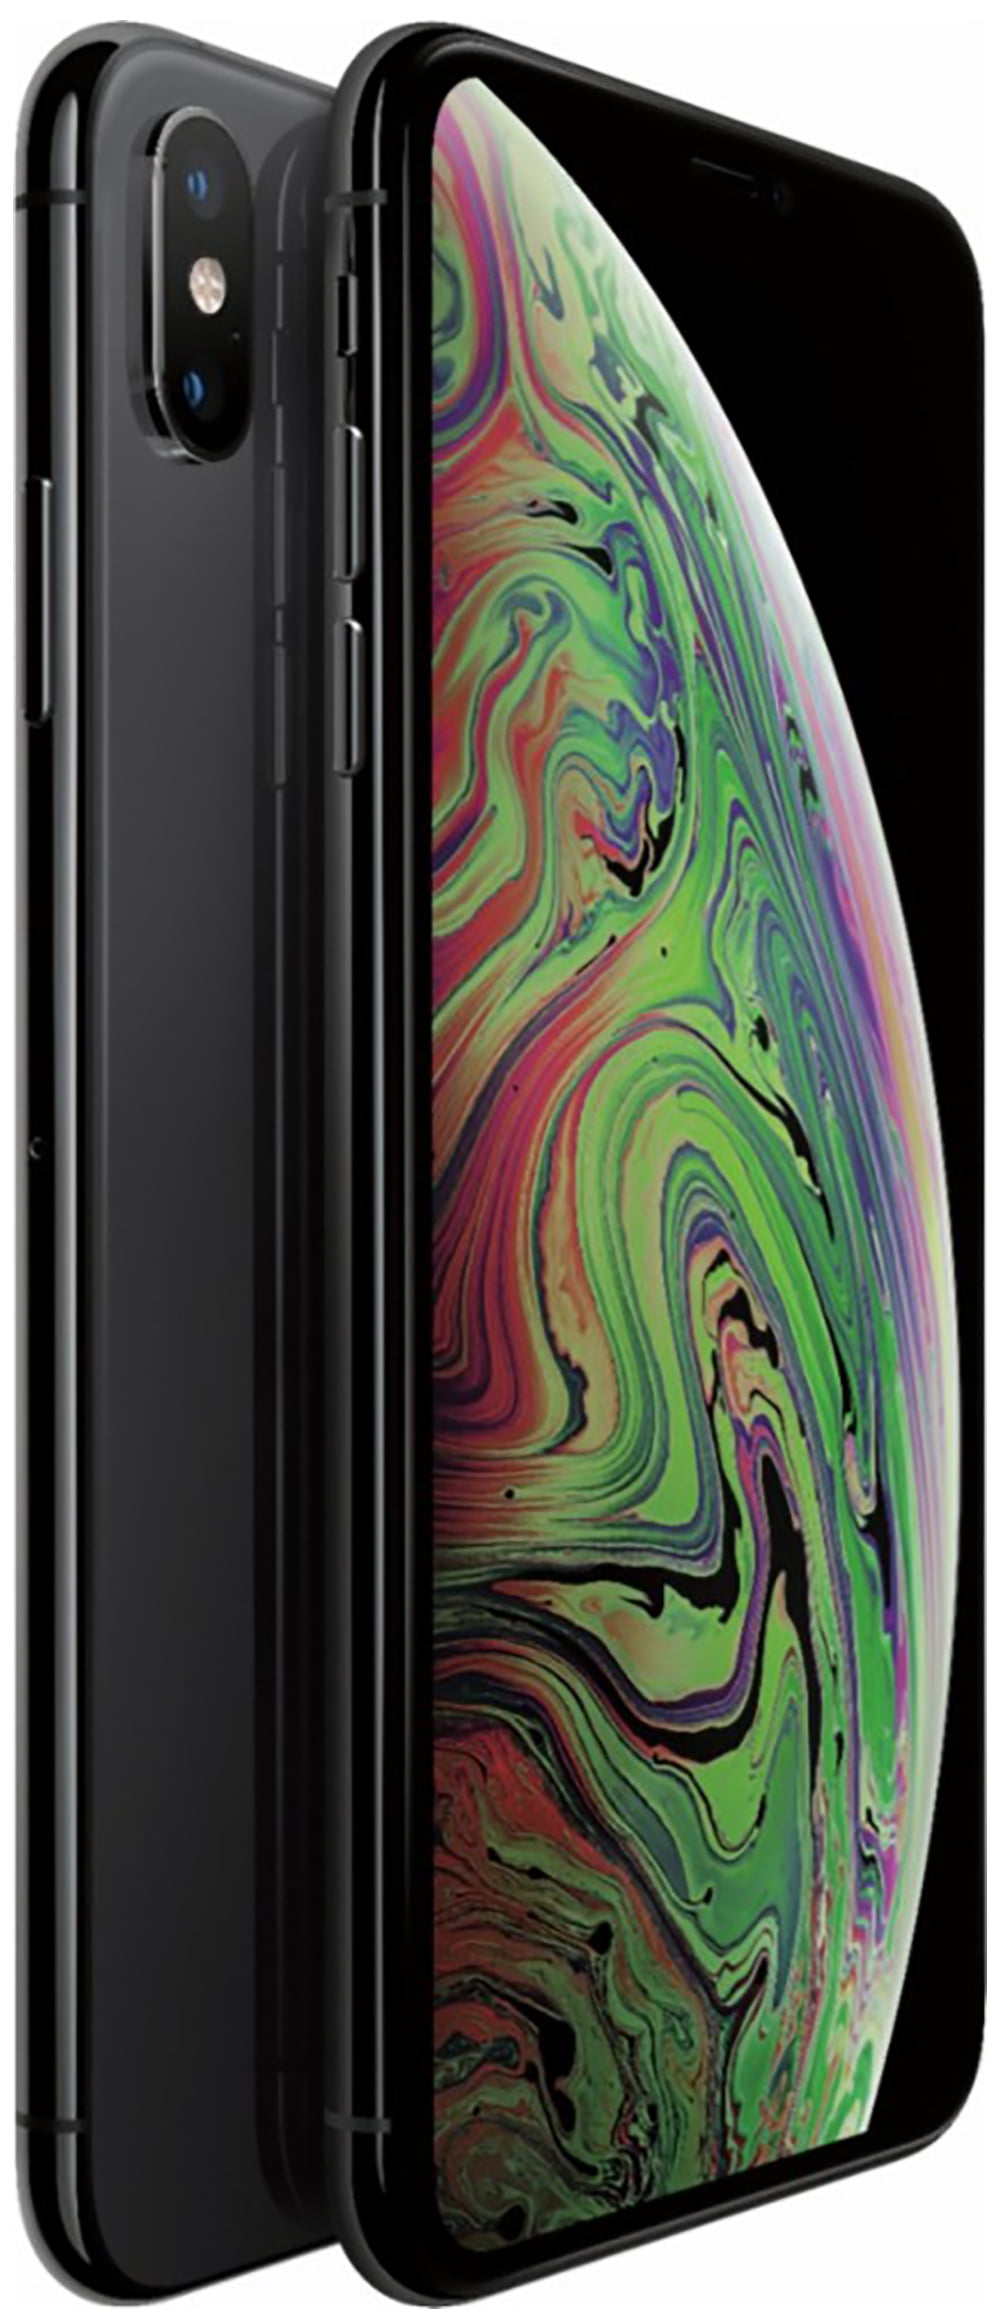 Apple iPhone XS Max 64GB Fully Unlocked (Verizon + Sprint + GSM Unlocked) -  Space Gray (Used)